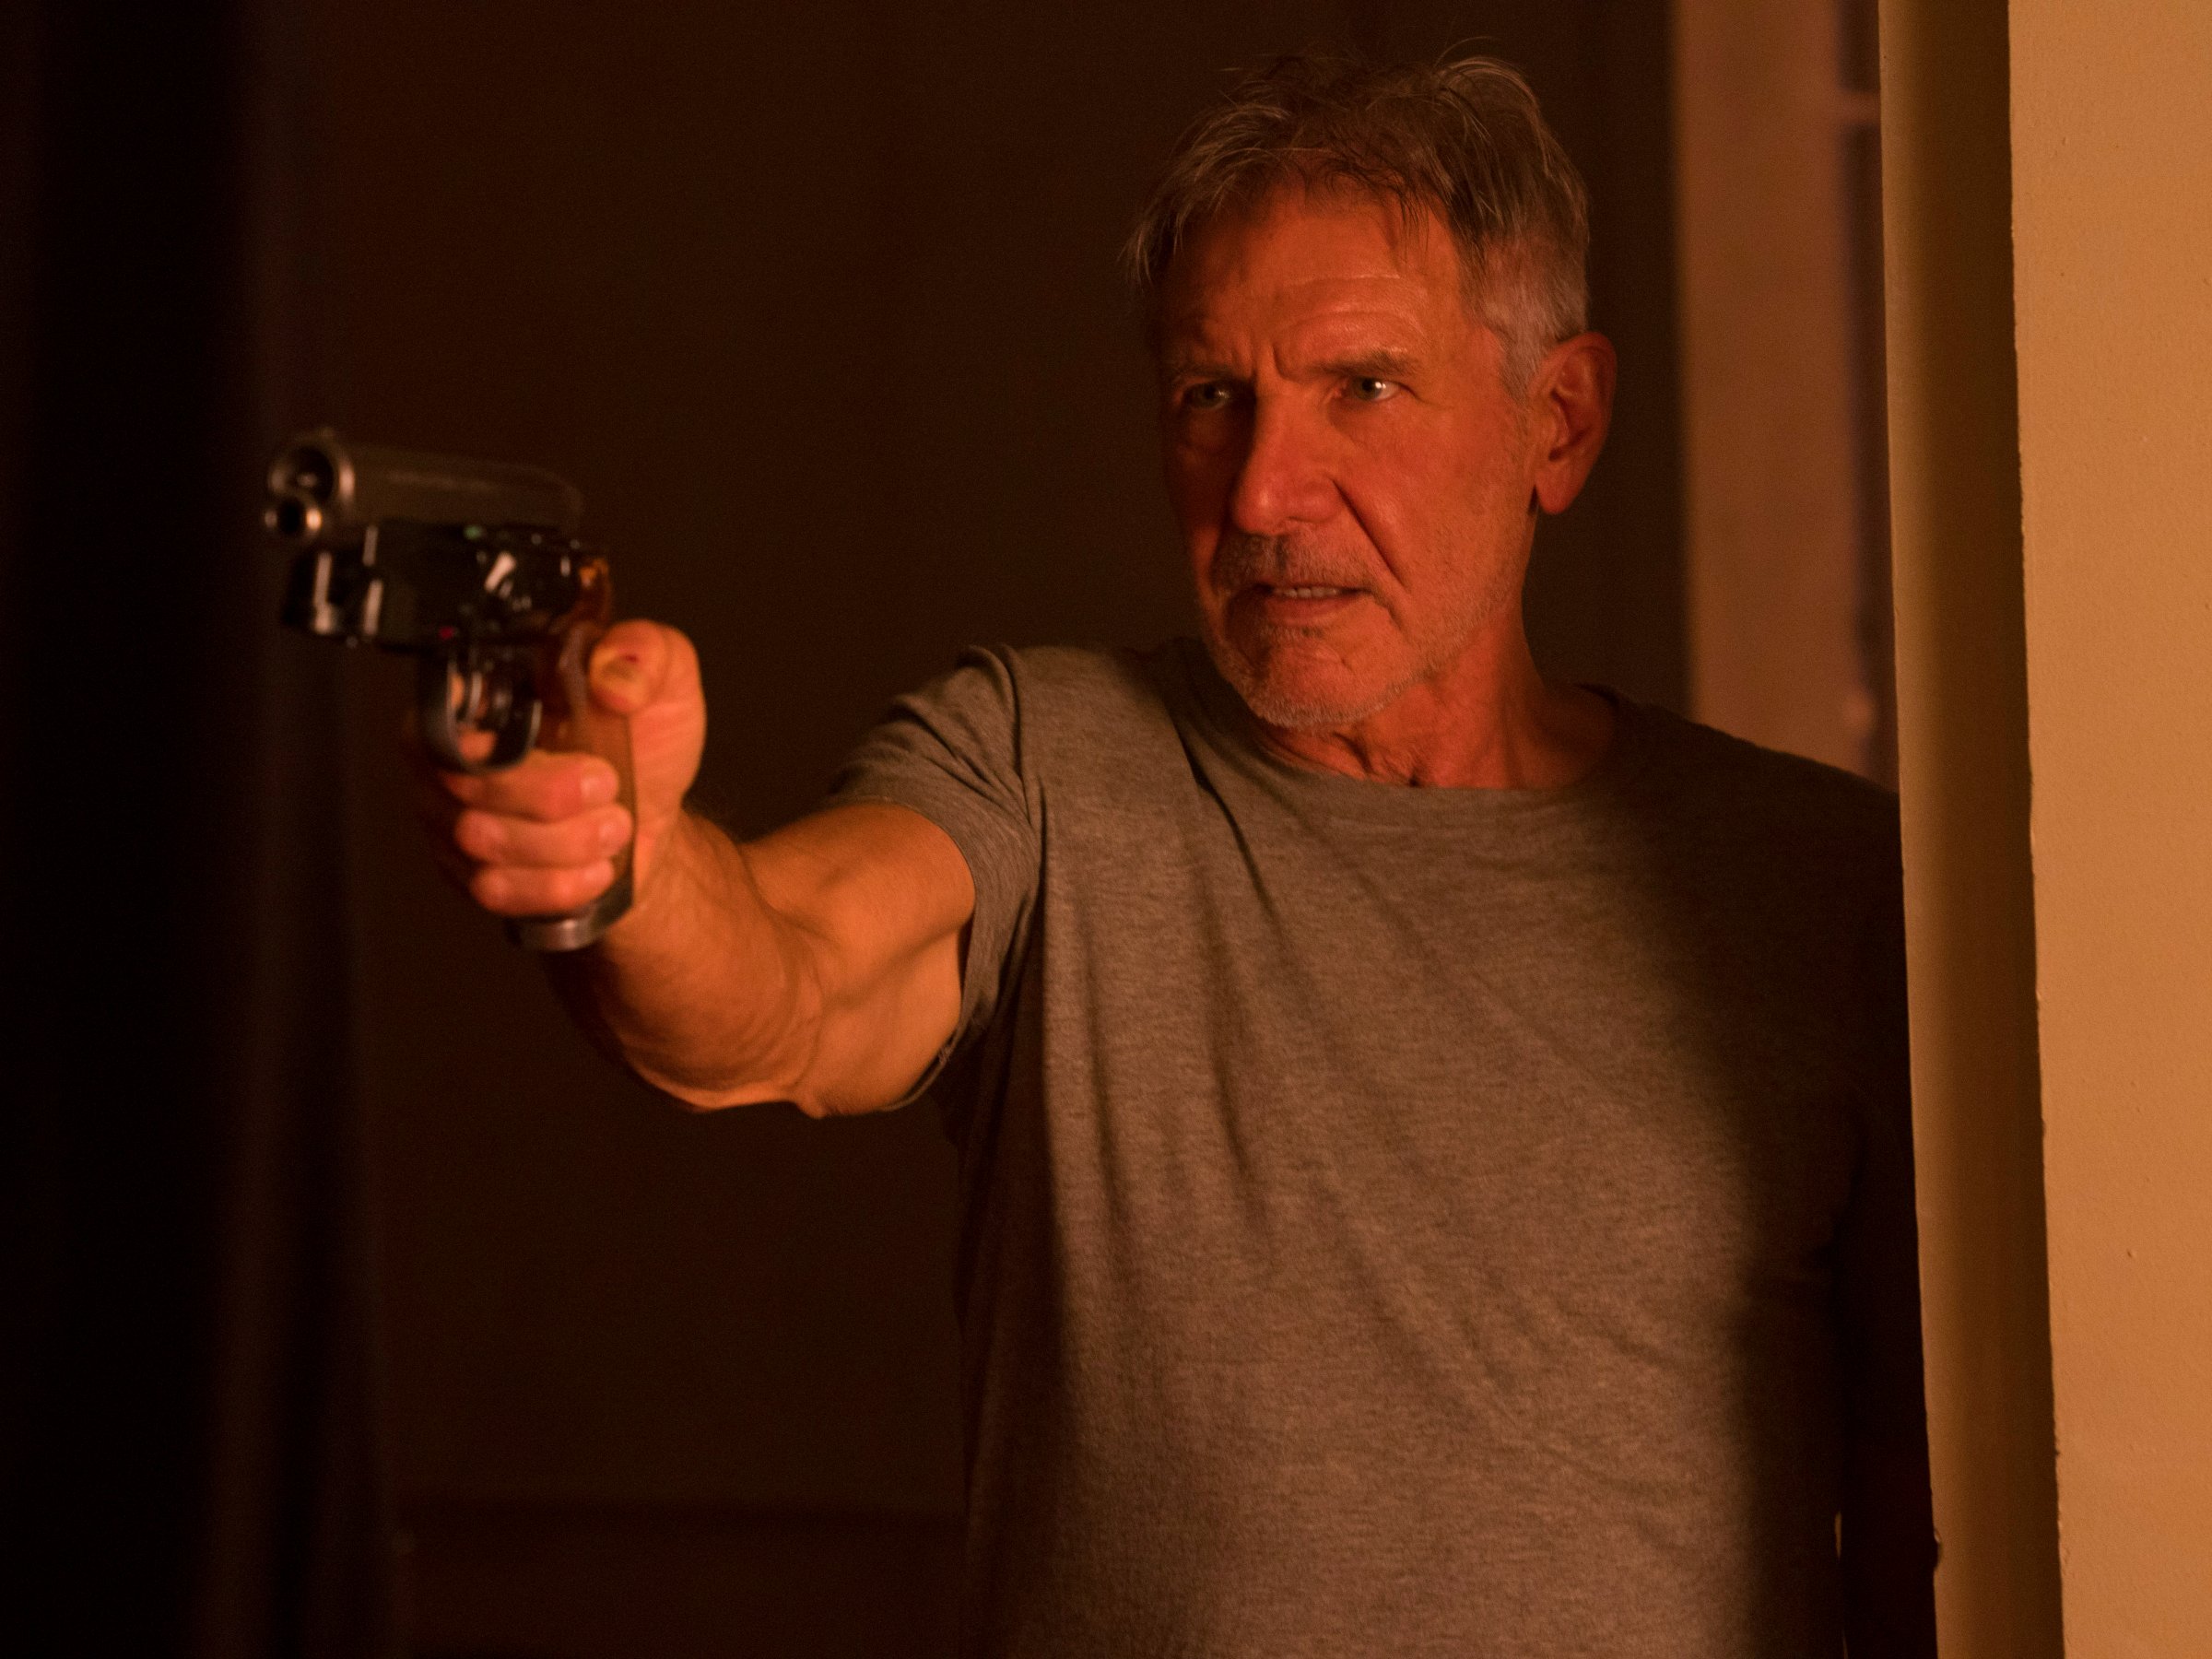 Harrison Ford's iconic character Deckard from the original Blade Runner film returns in Blade Runner 2049